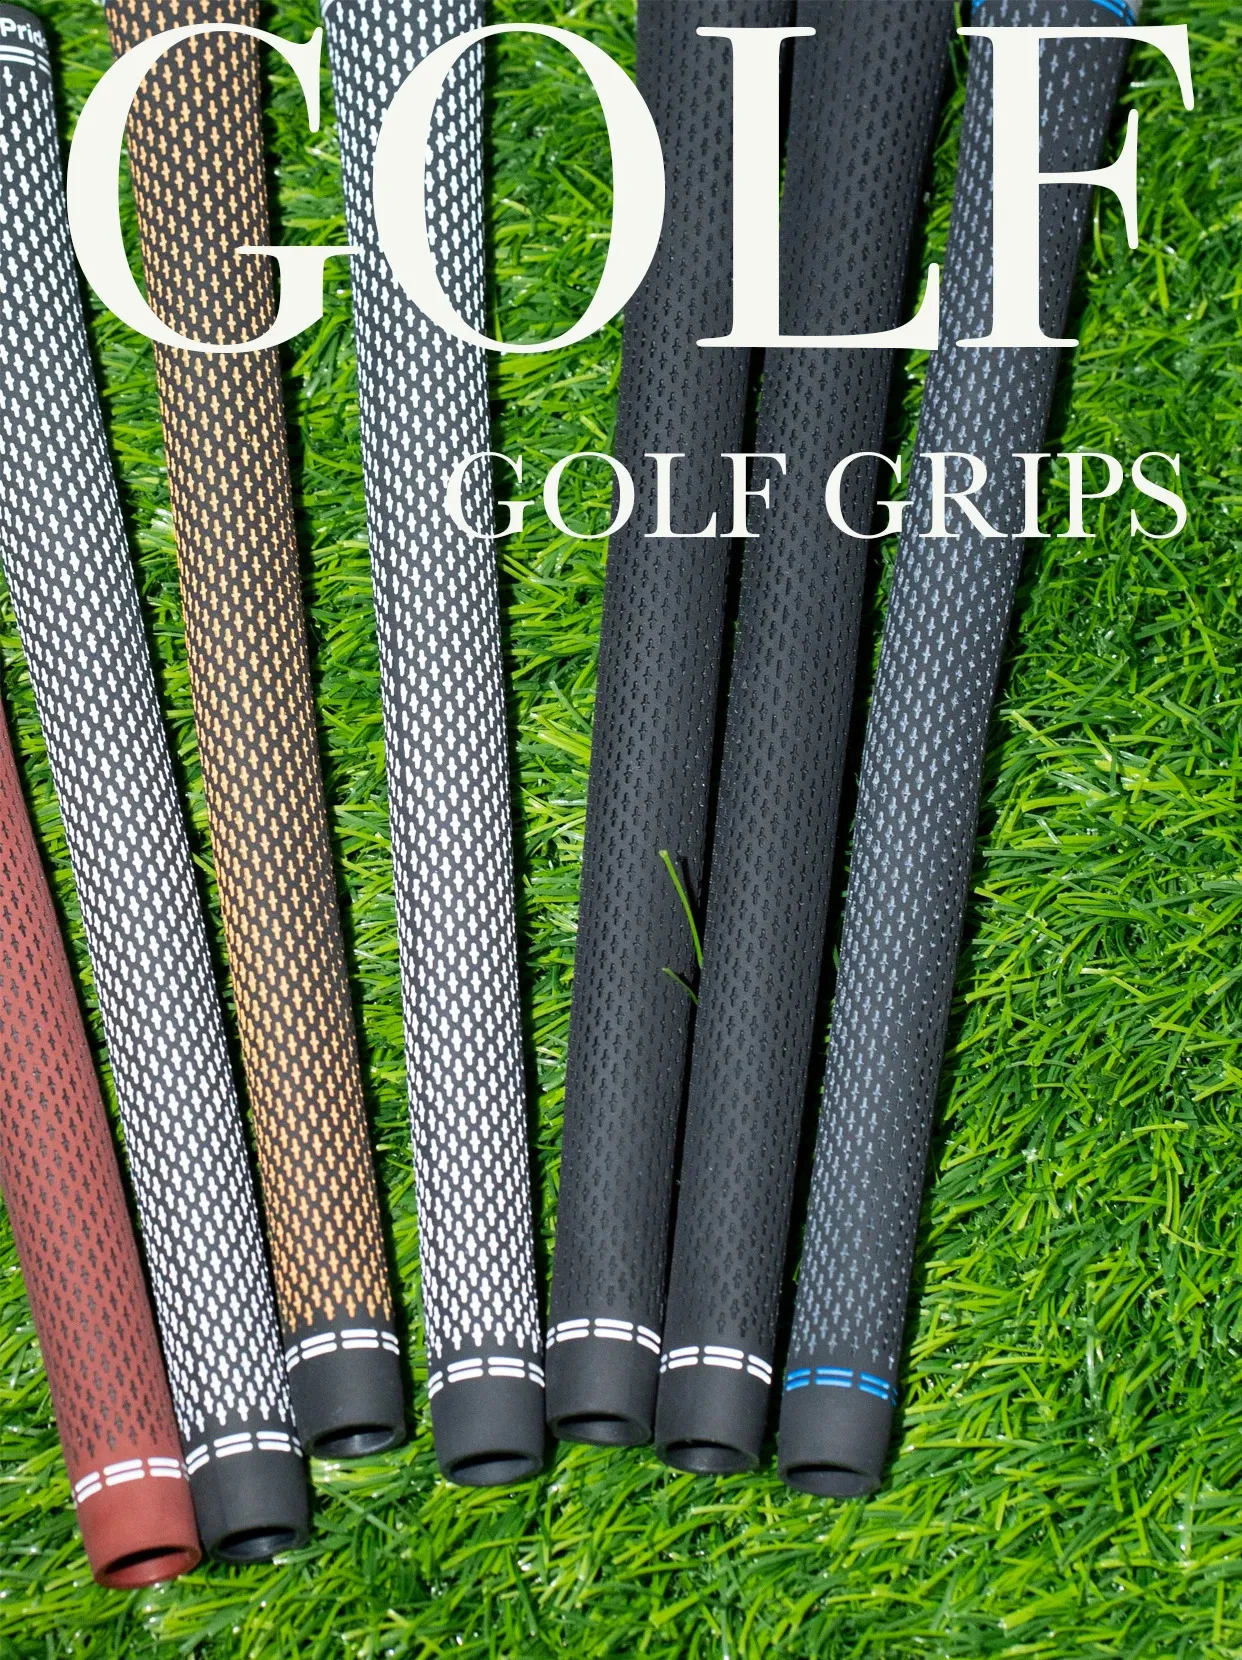 360Golf Grip GP Rubber Golf Club Grips Undersize/Midsize 240323